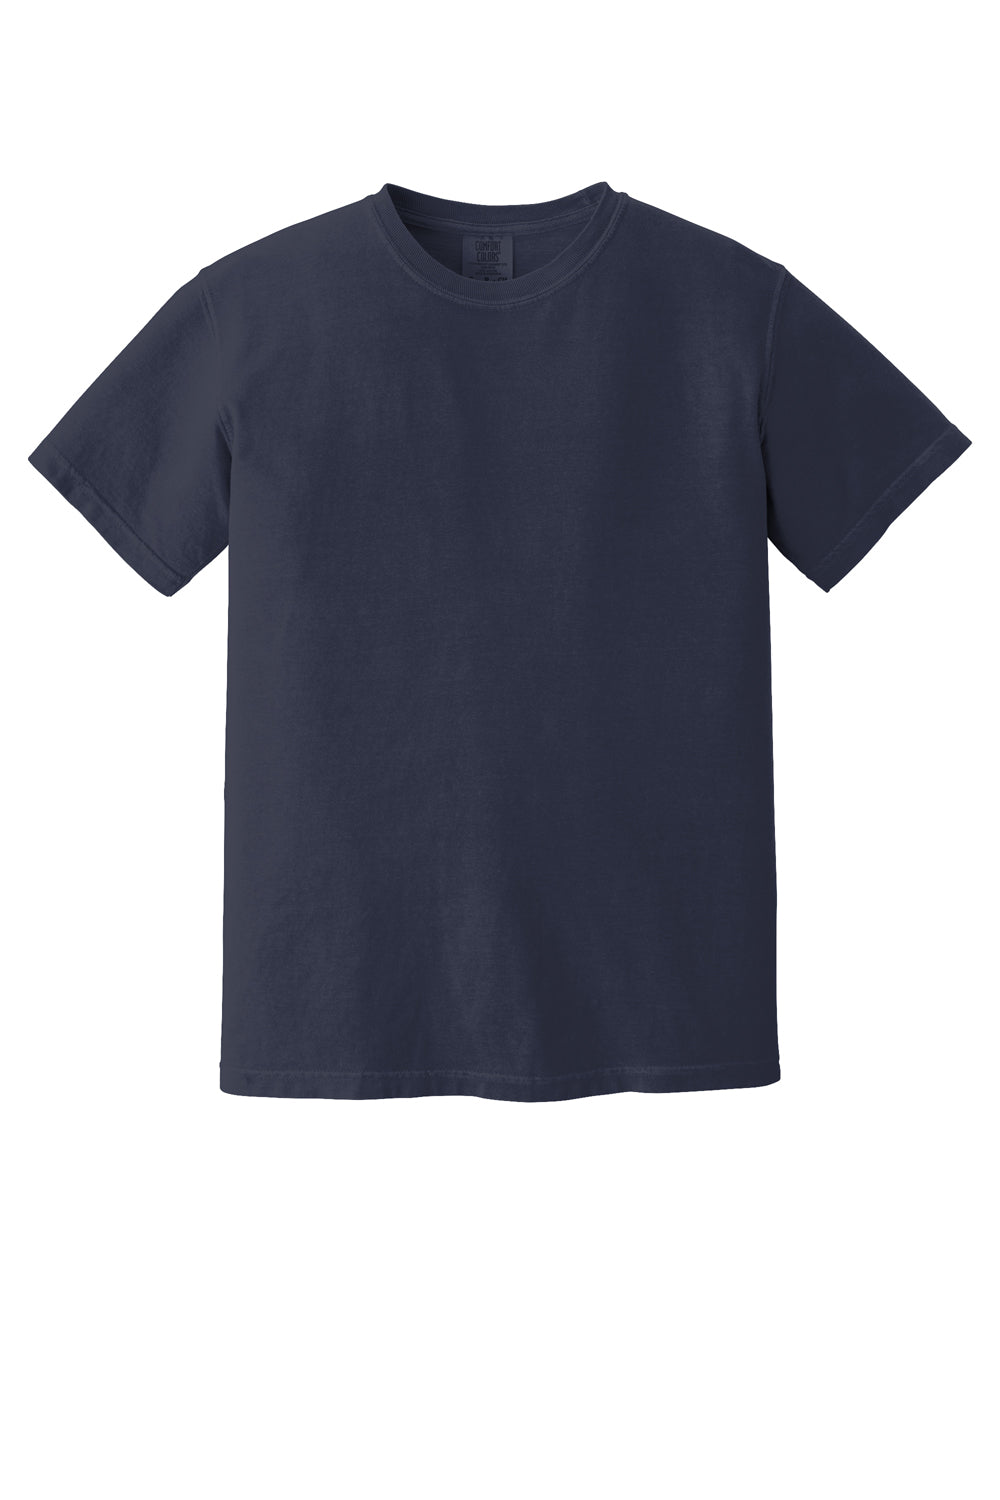 Comfort Colors Mens Short Sleeve Crewneck T-Shirt Navy Blue Flat Front